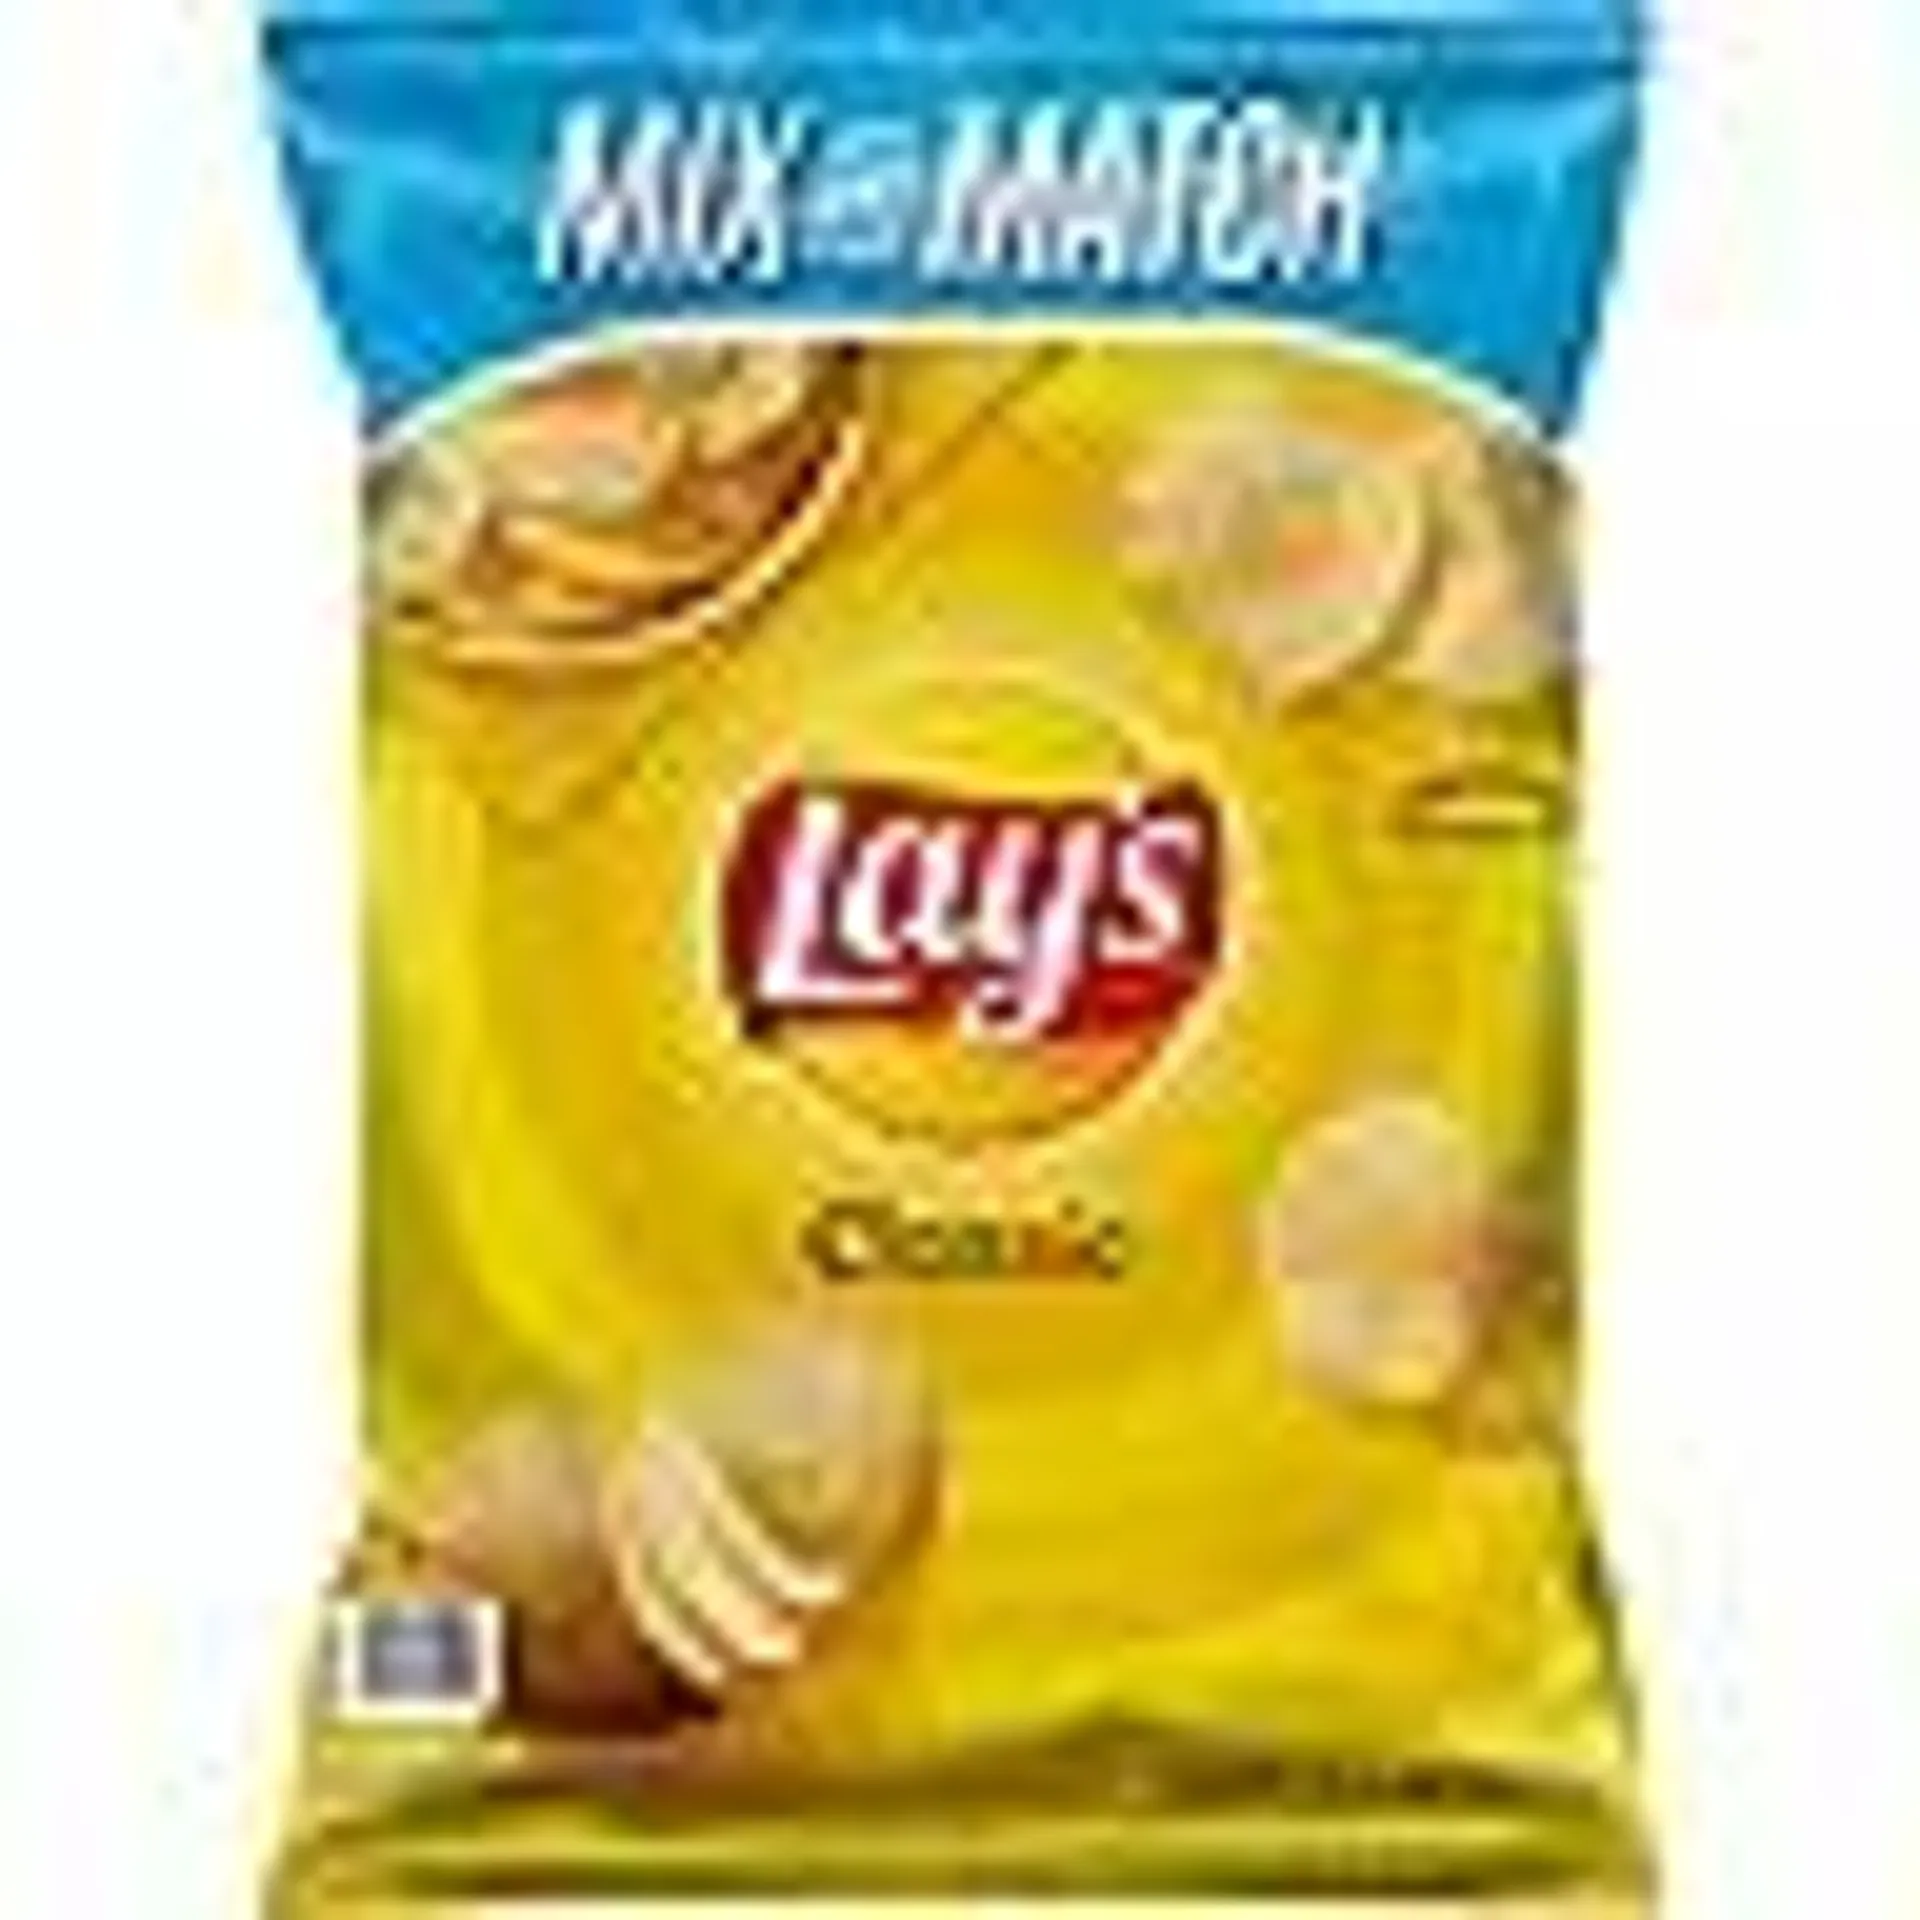 Lay's Classic Potato Chips, 15.625 oz.